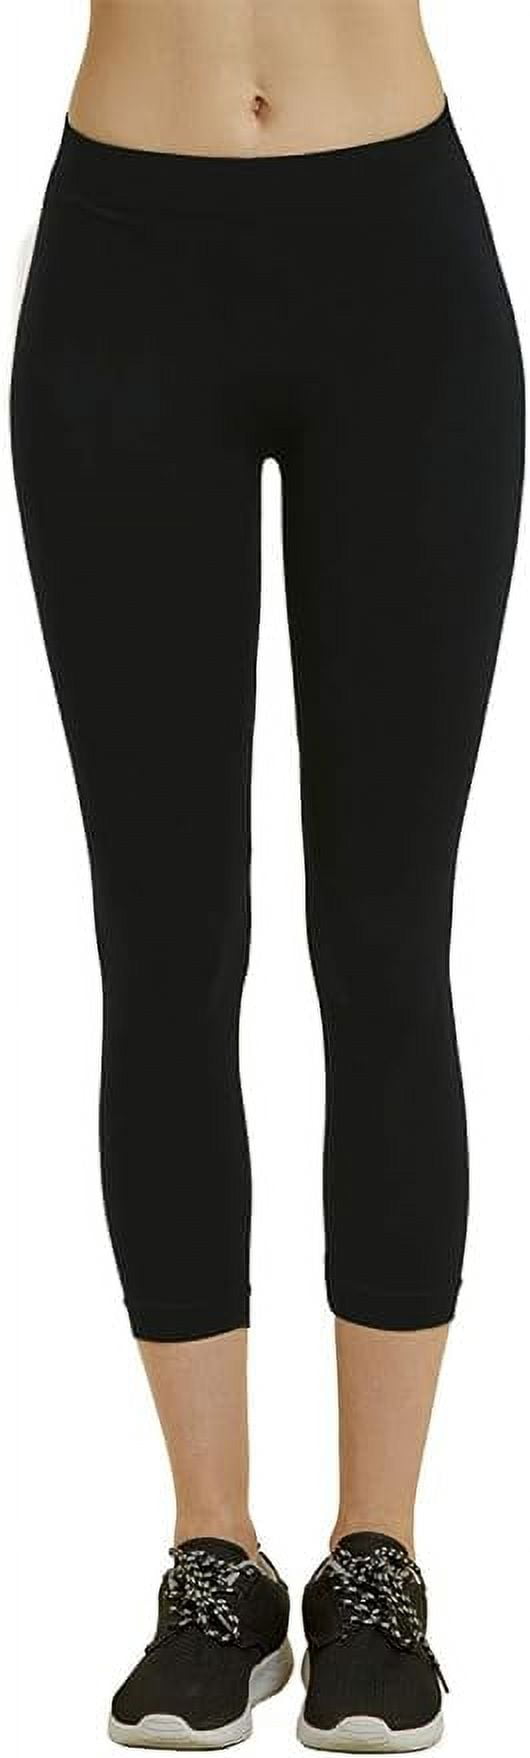 Avia Stretch Pants, Description: Avia Black & Pink Metallic Marbling Design  Leggings Waistband Women's Small.